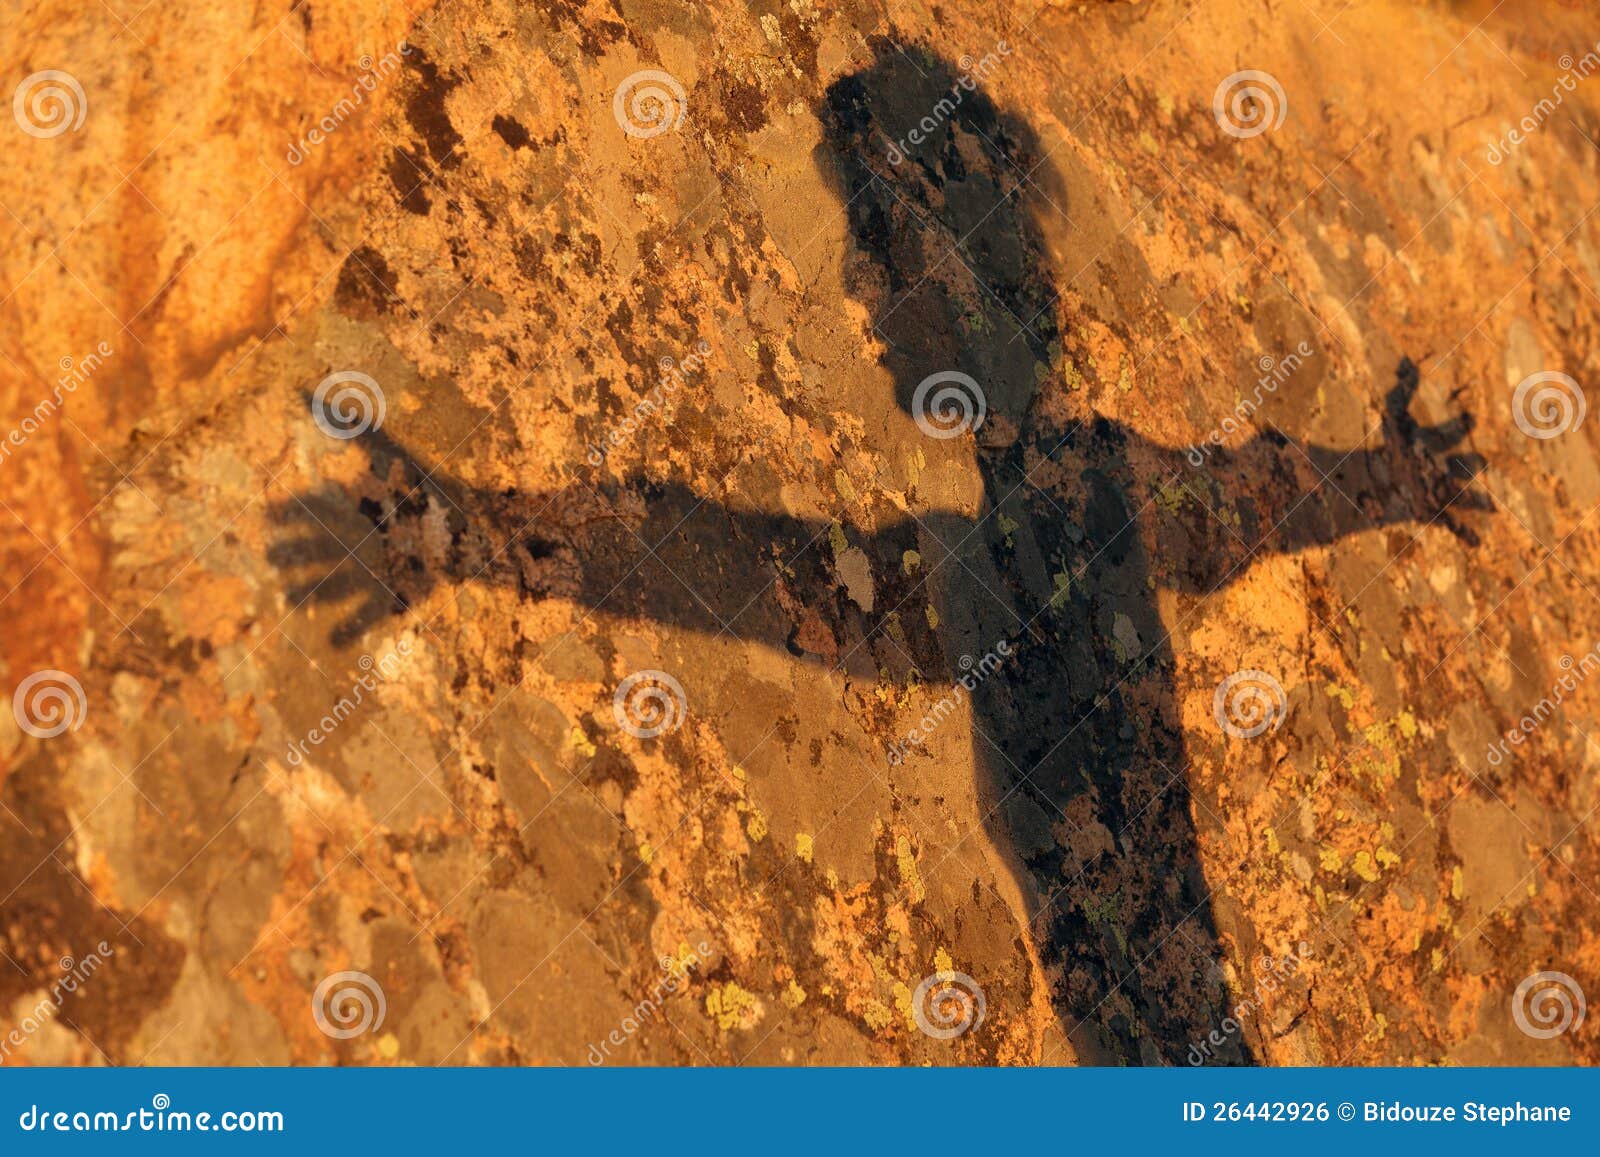 woman shadow on granite wall